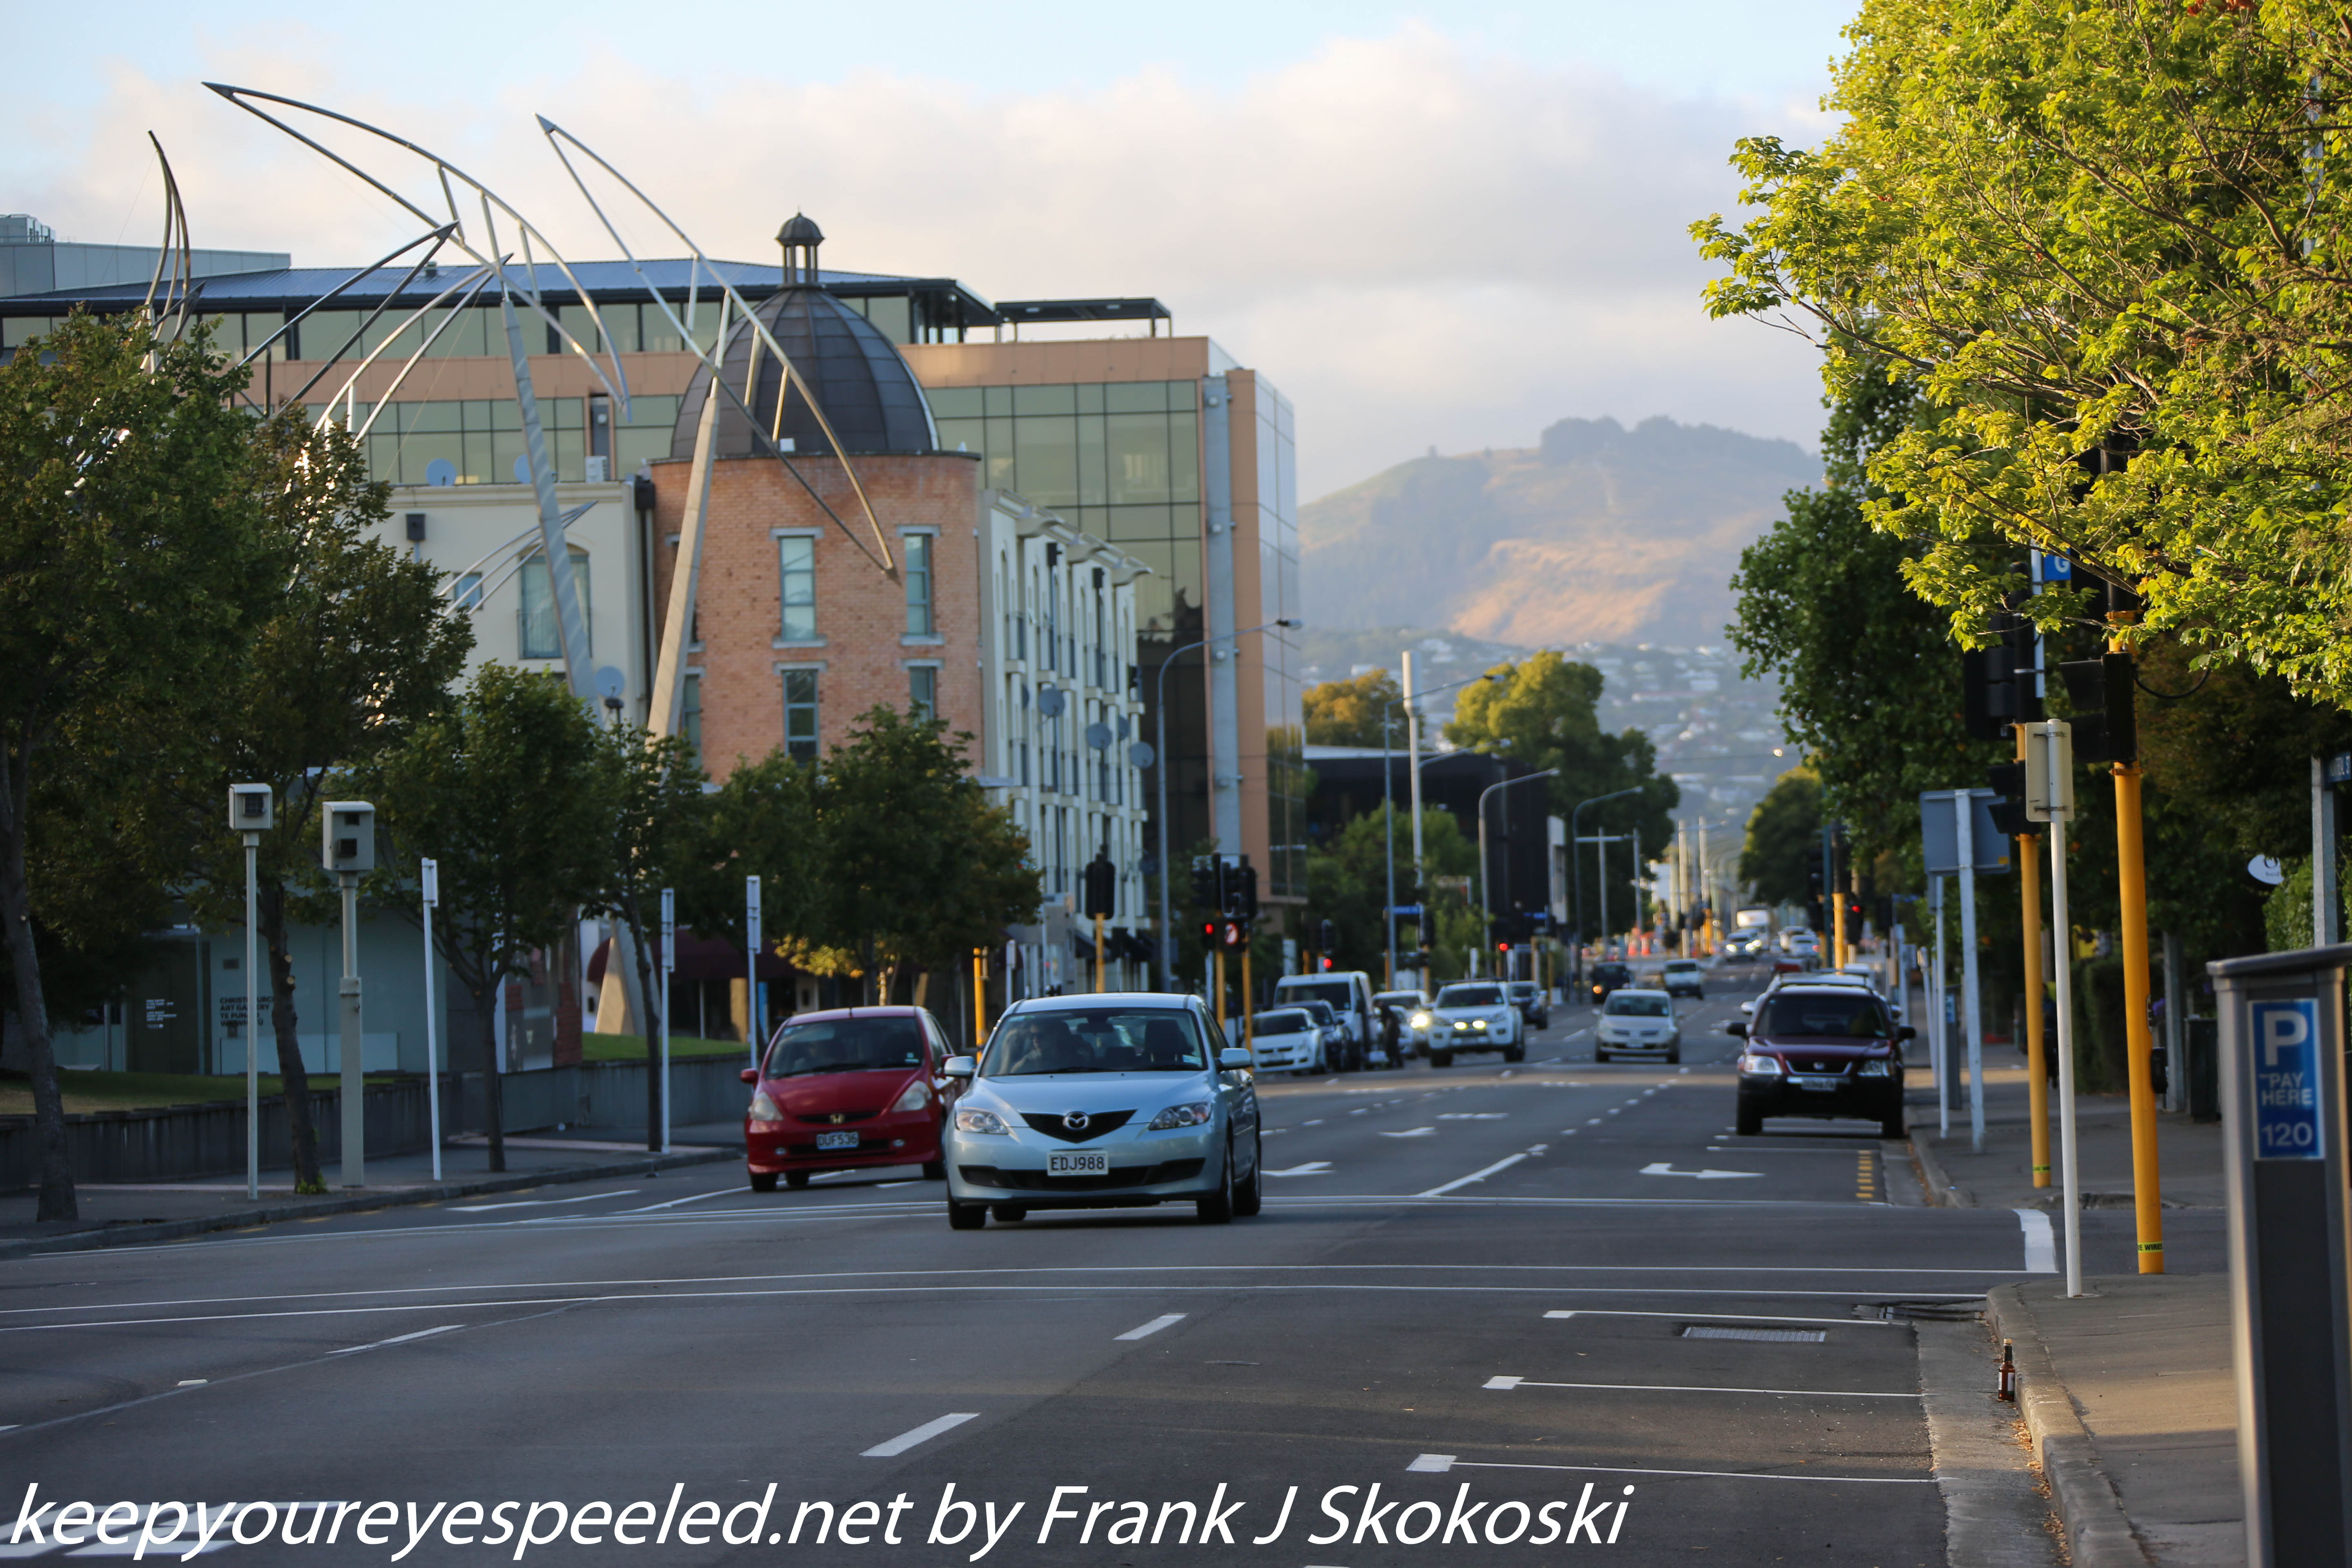 New-Zealand-Christchurch-morning-walk-Feburary-8-46-of-47